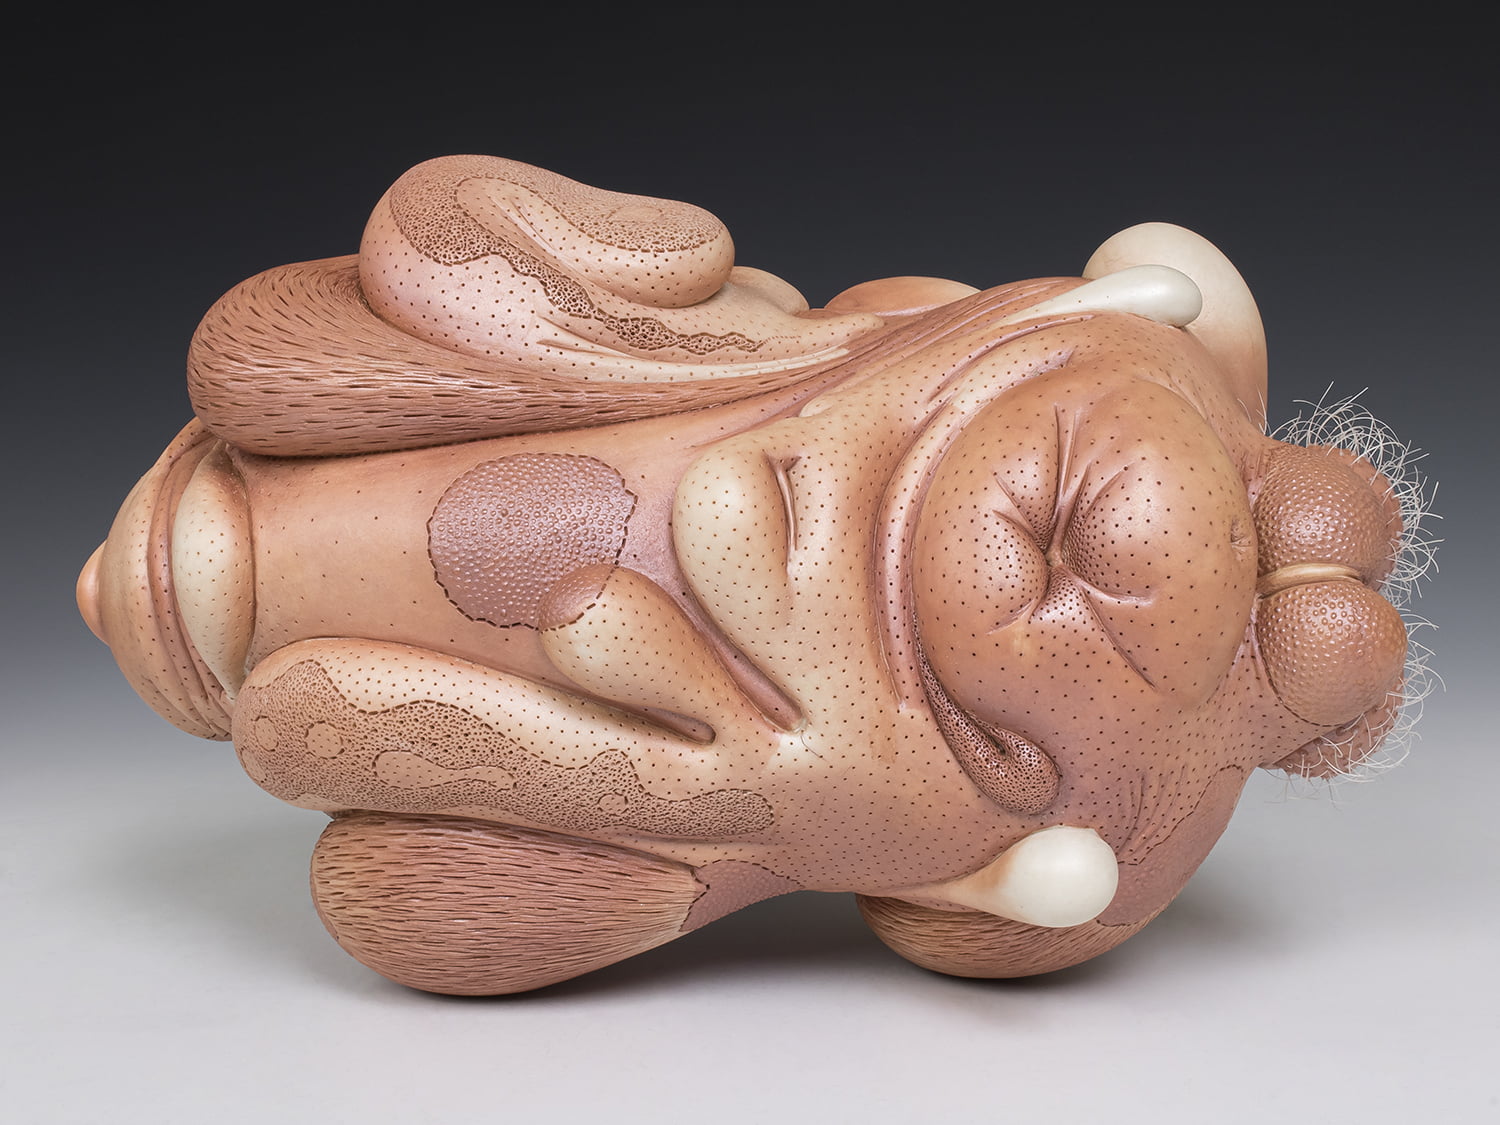 Jason Briggs "Blush" (alternate view). porcelain, hair, and mixed media sculpture ceramics.